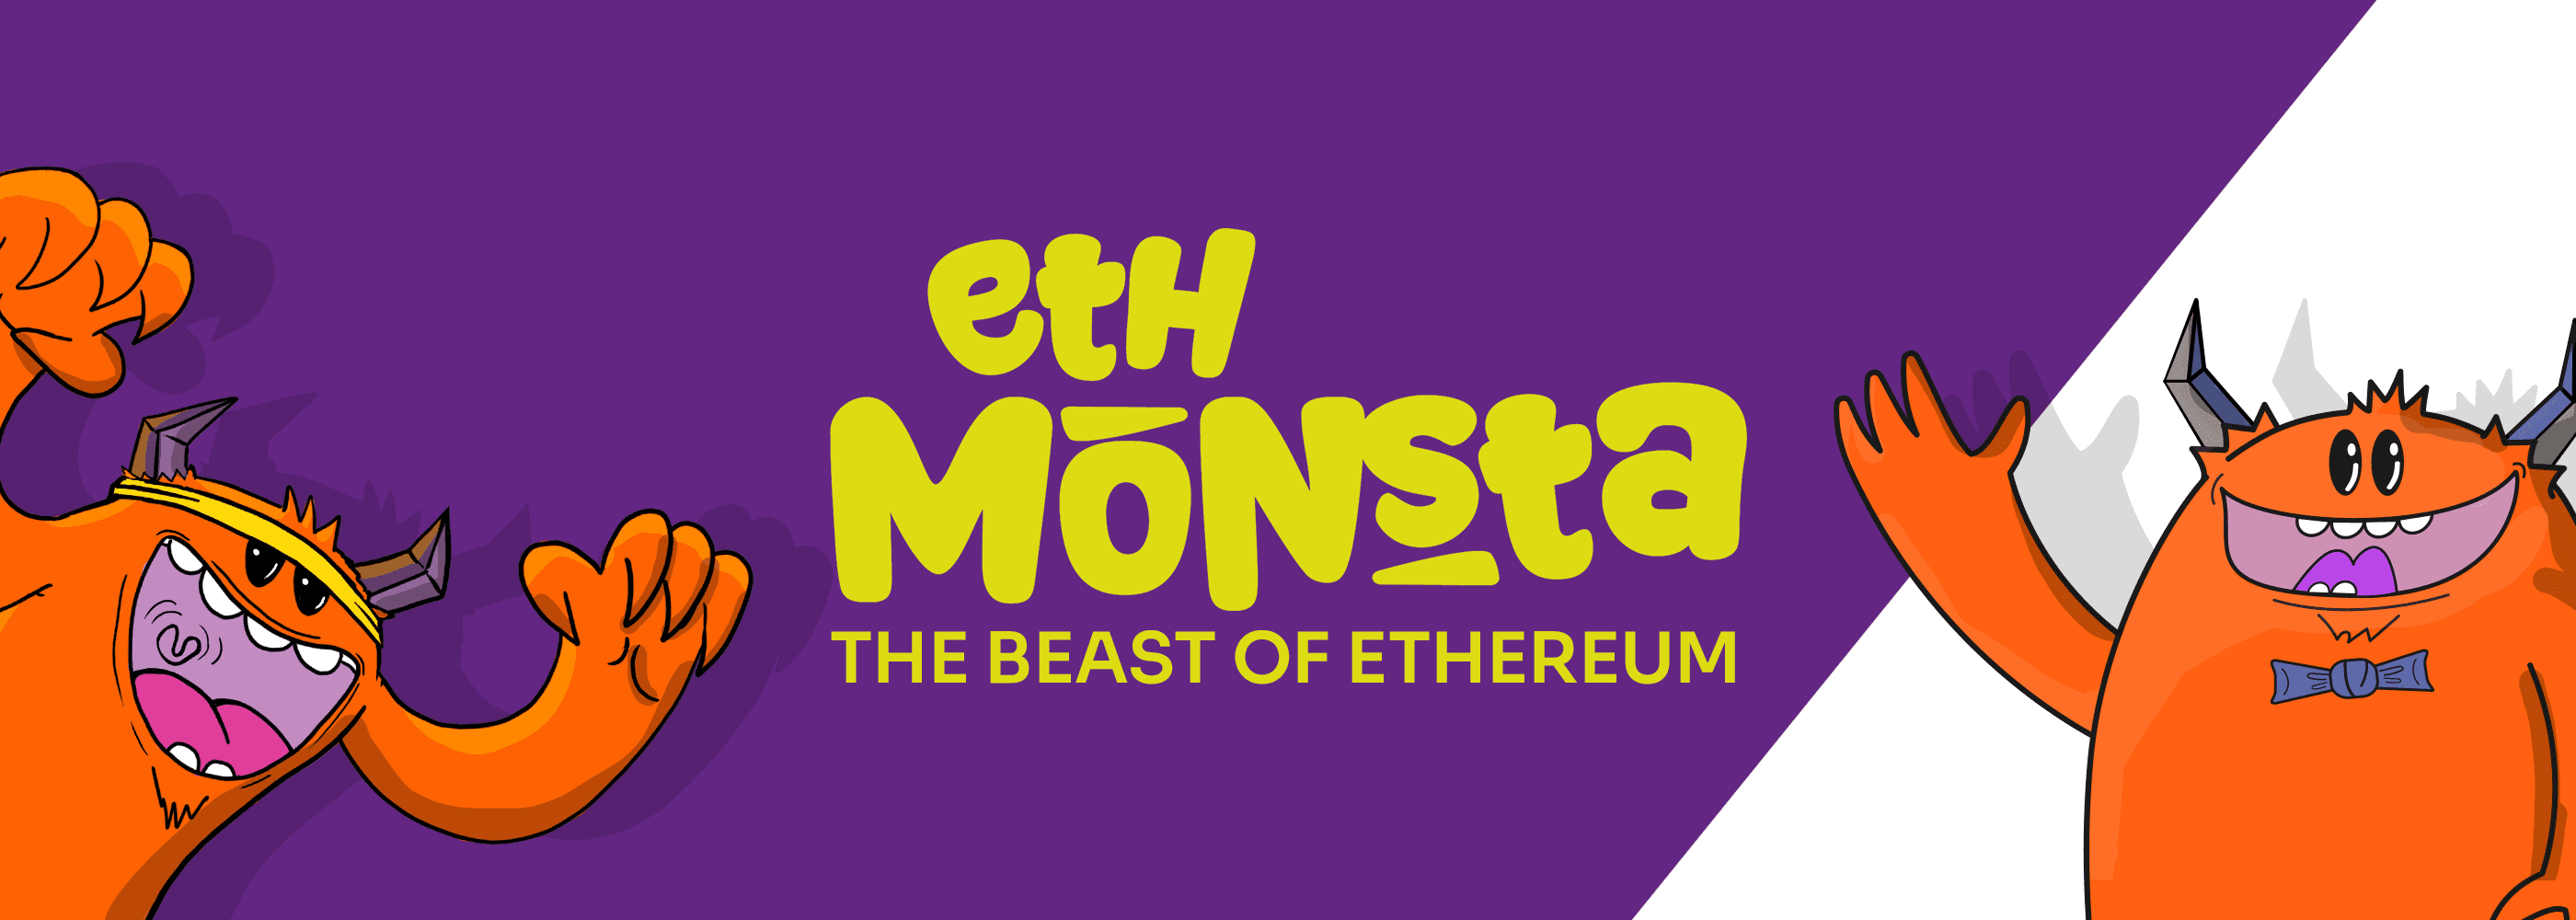 Monsta_ETH banner